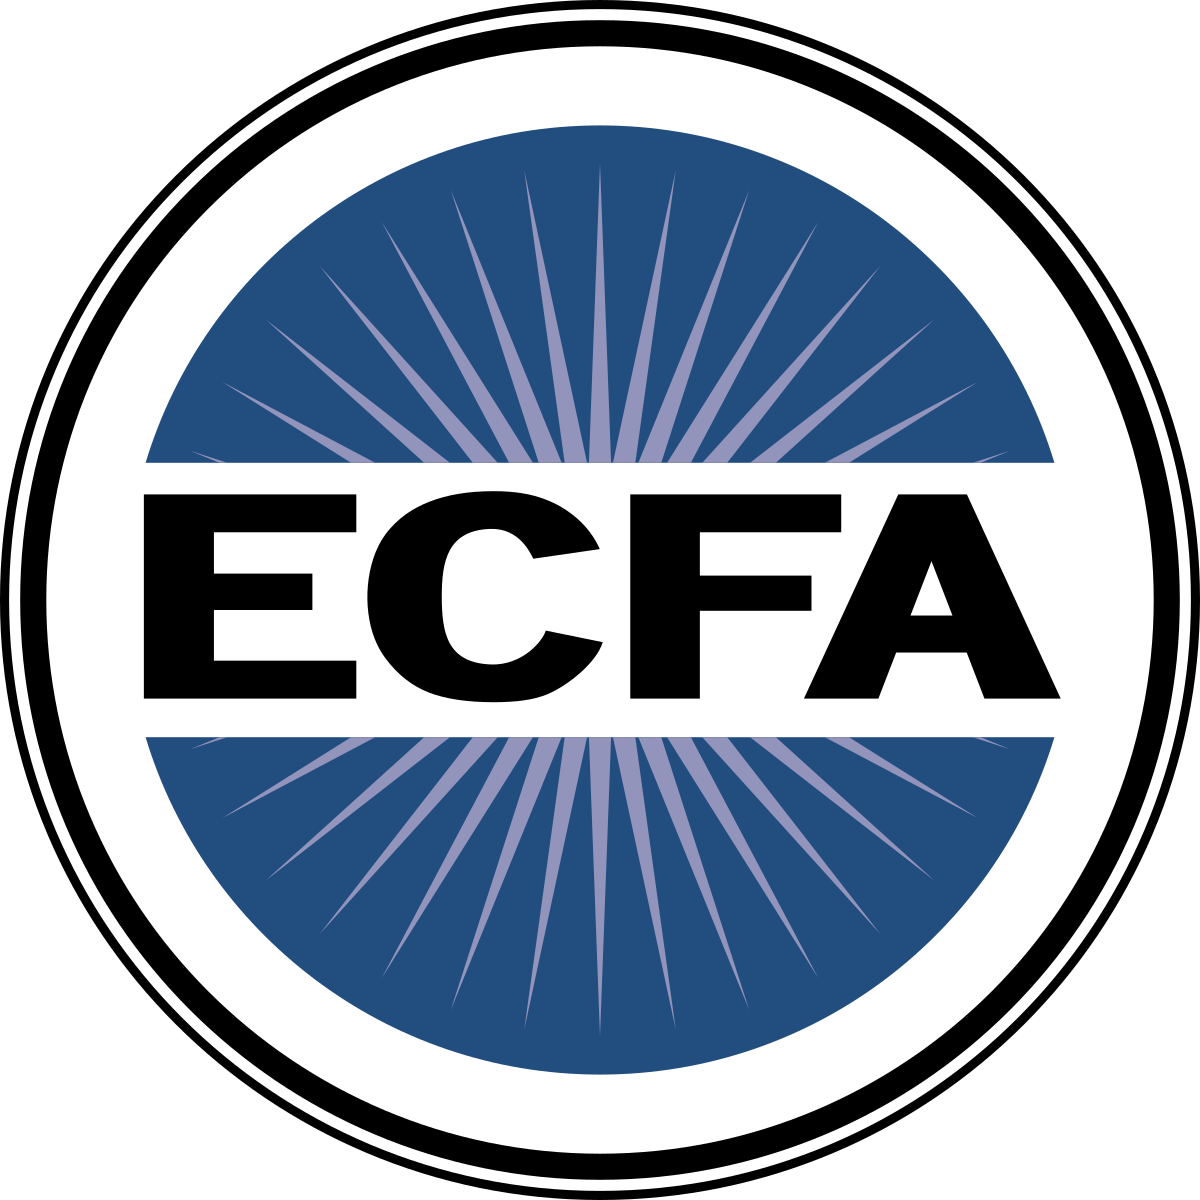 Evangelical Council for Financial Accountability (ECFA) logo